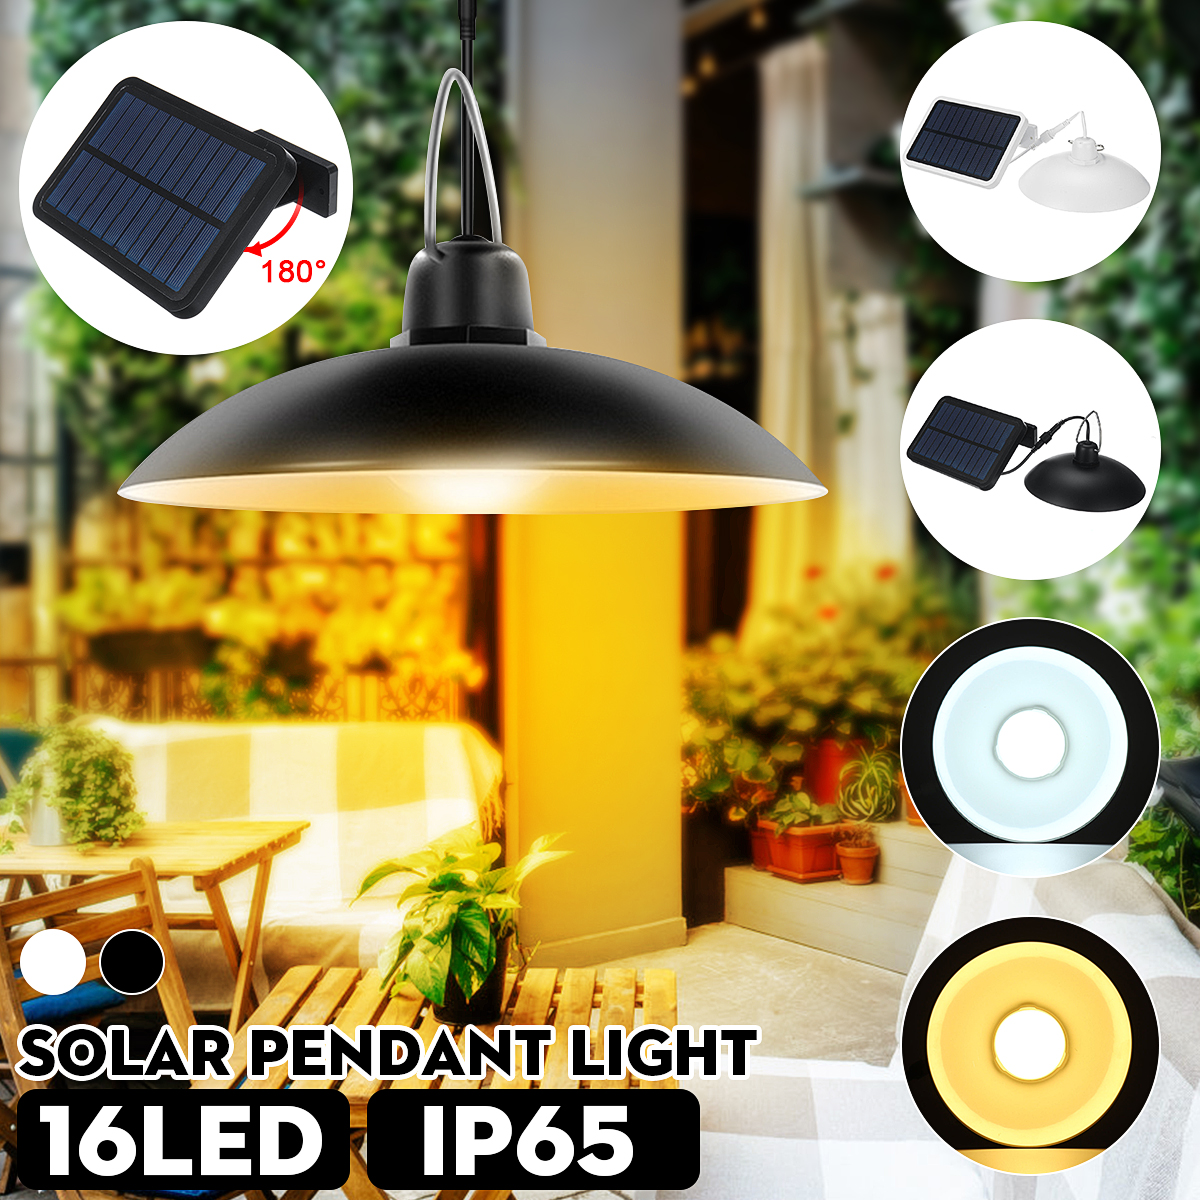 260-Lumen-Solar-Pendant-Light-Outdoor-Indoor-Solar-Lamp-With-Line-Warm-WhiteWhite-Lighting-For-Campi-1761765-1